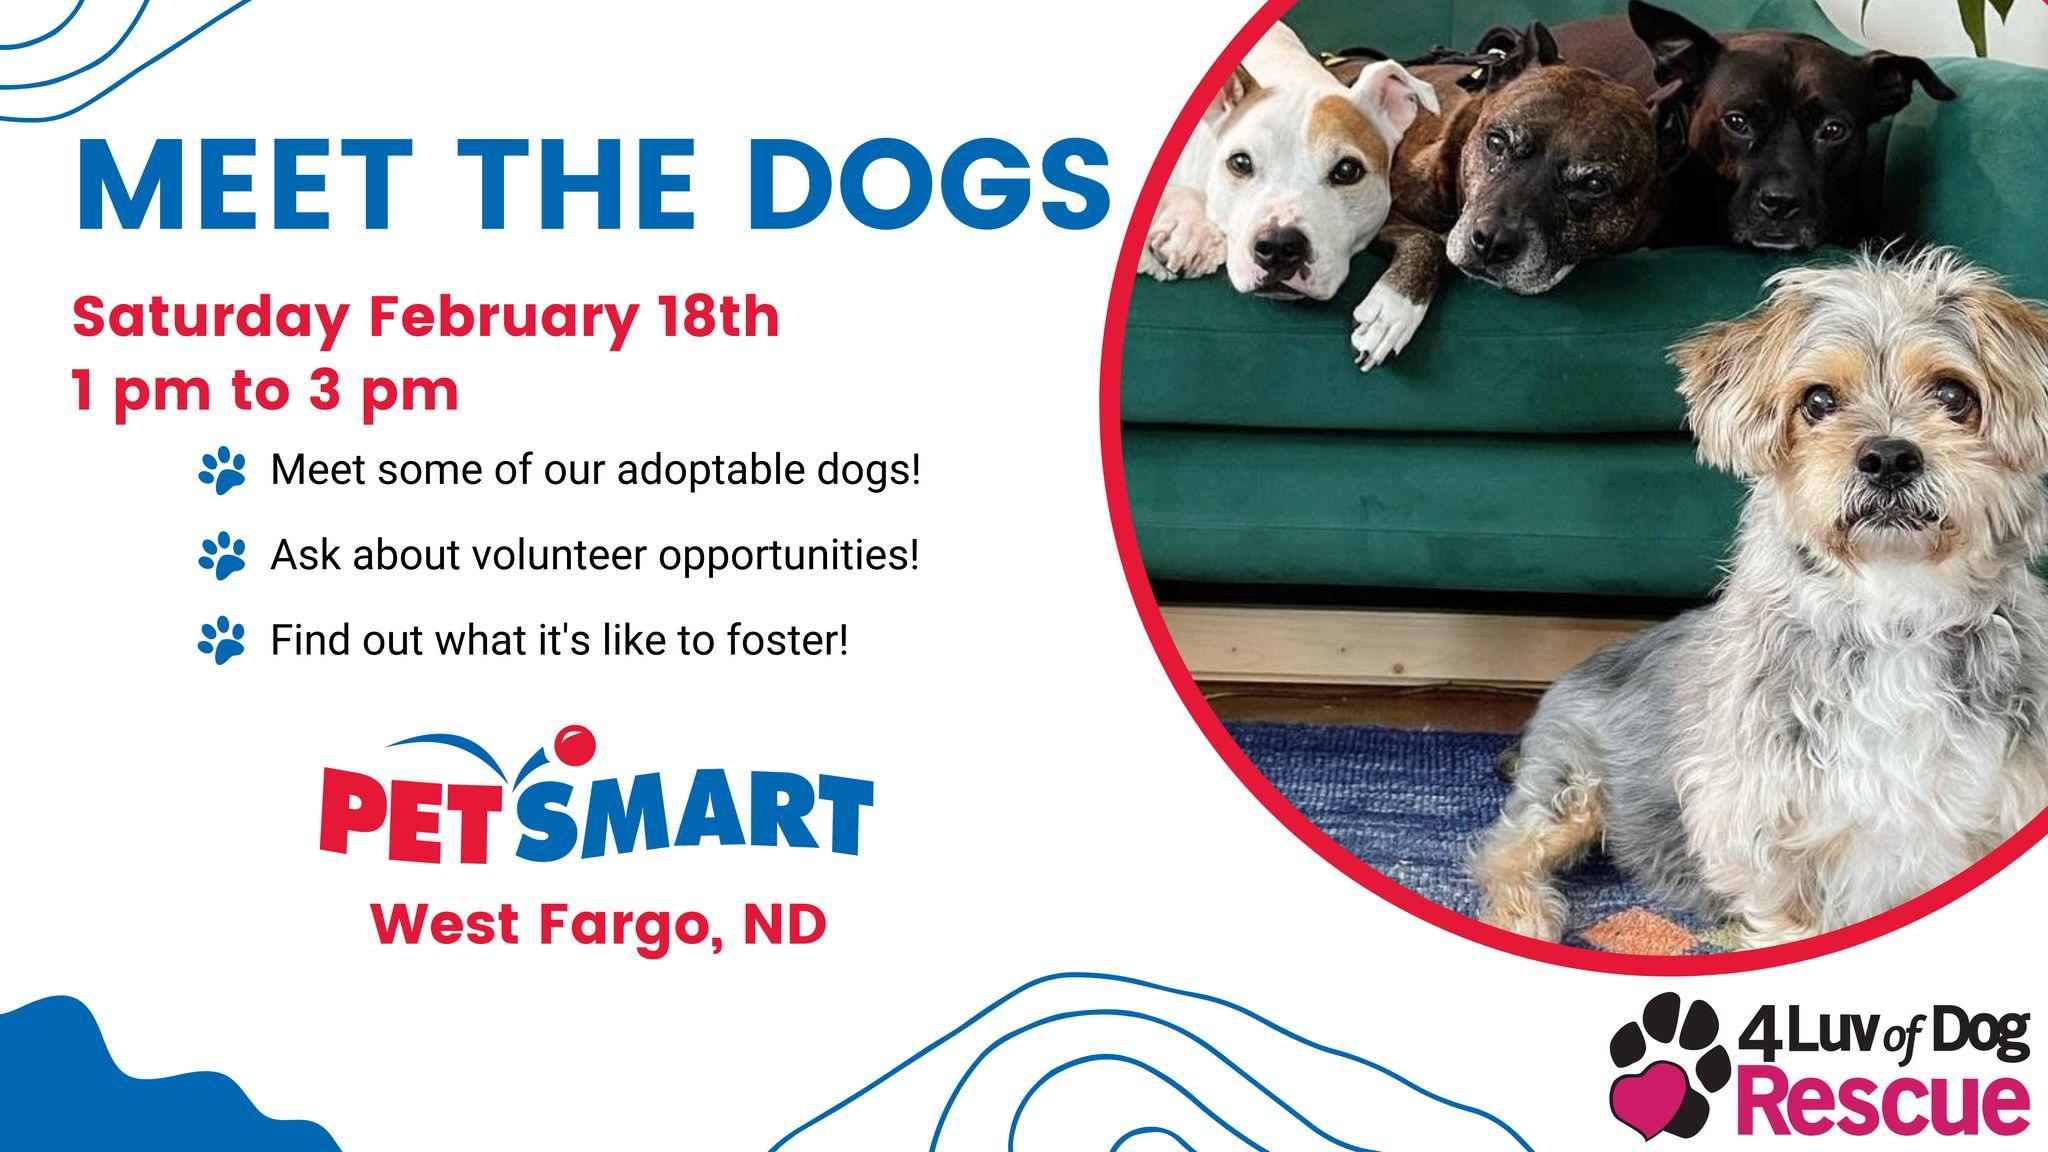 Meet the Dogs - West Fargo, ND PetSmart Event - February 18, 2023